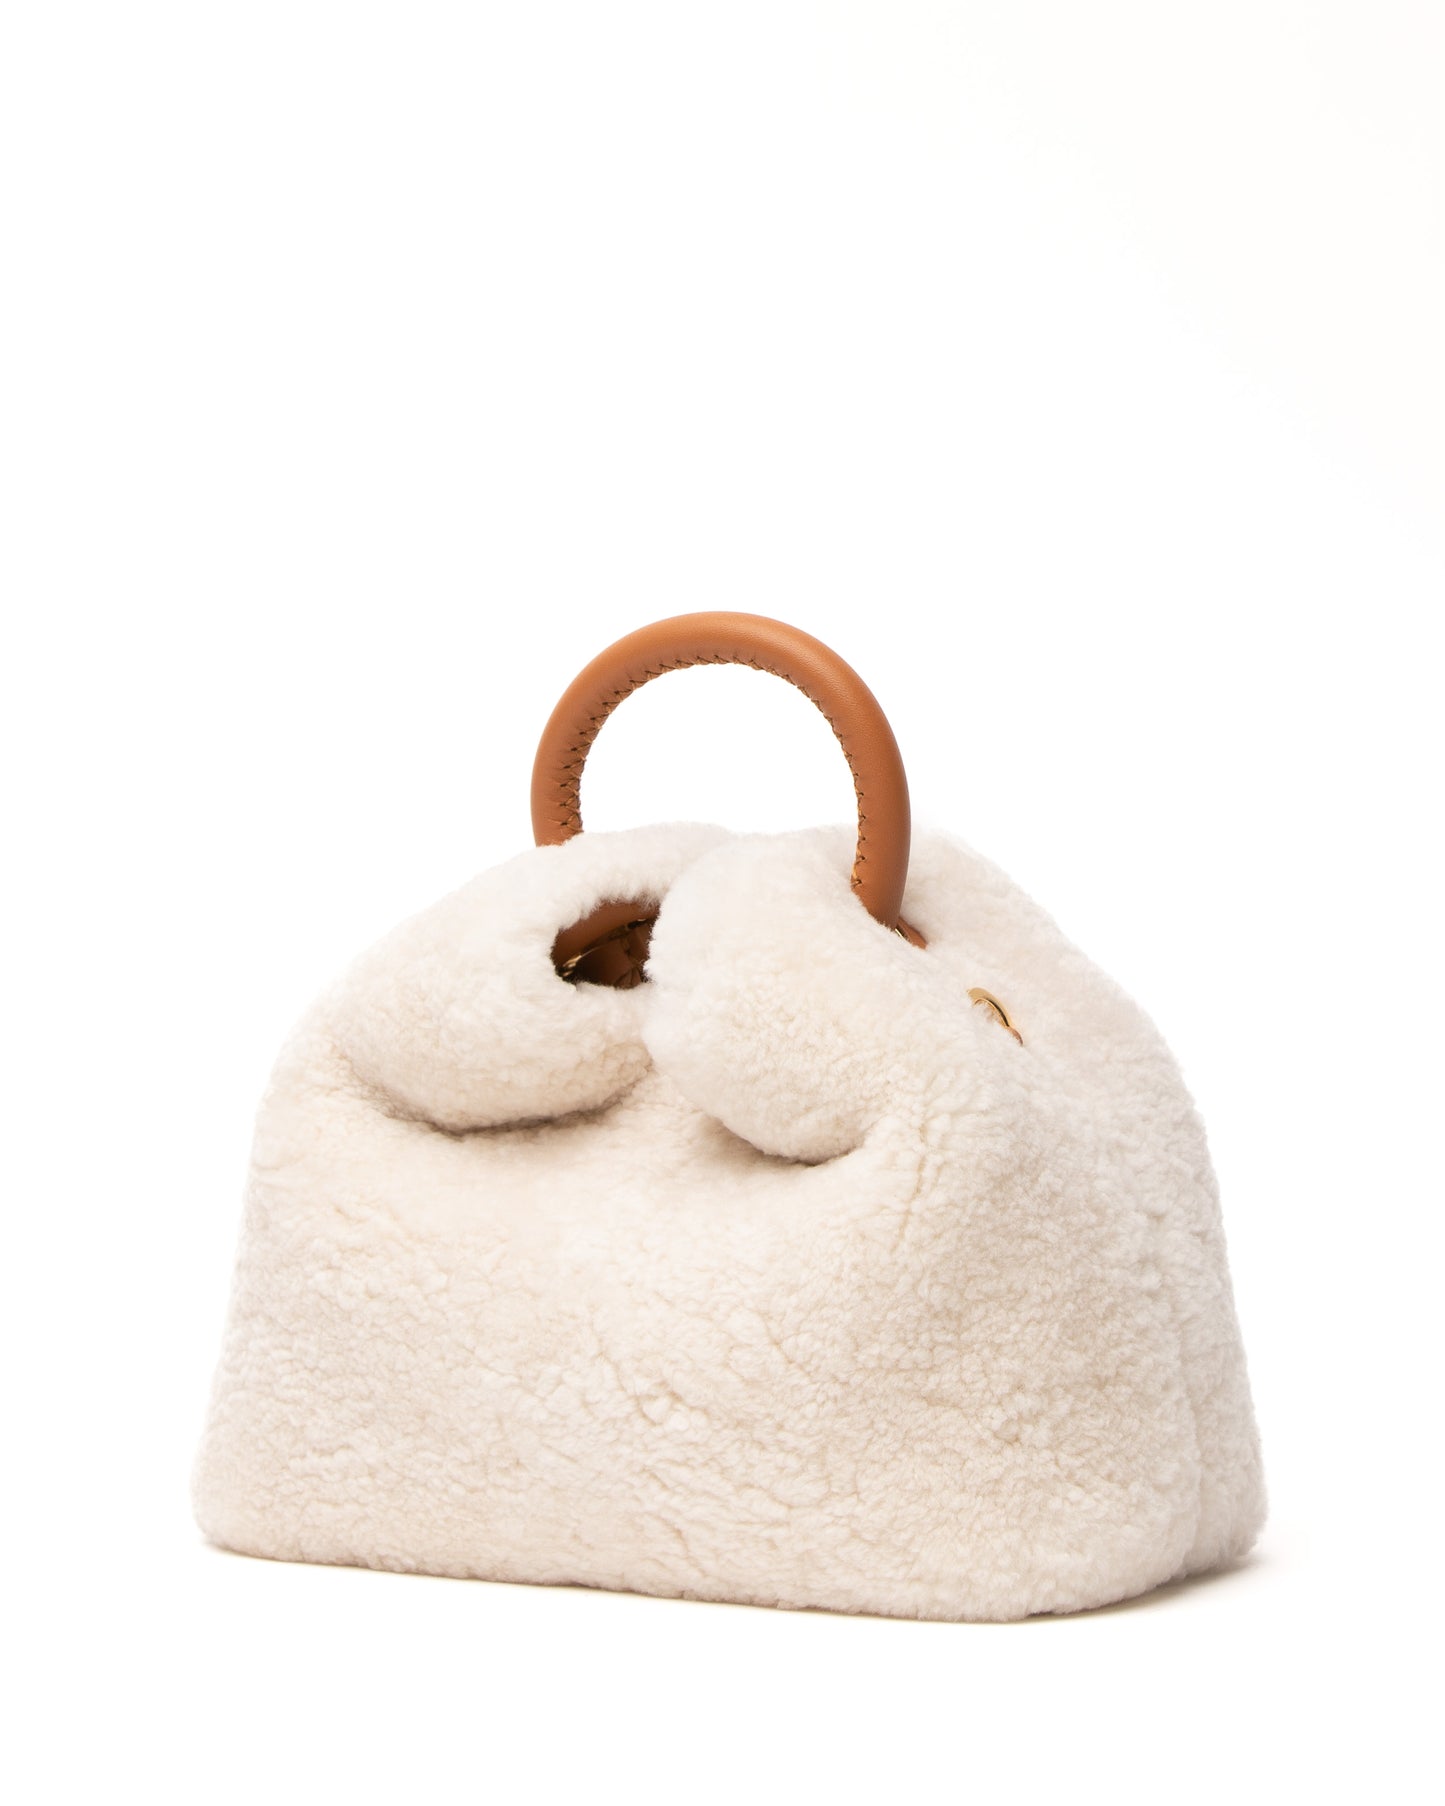 Baozi Shearling Teddy White/Caramel Bag